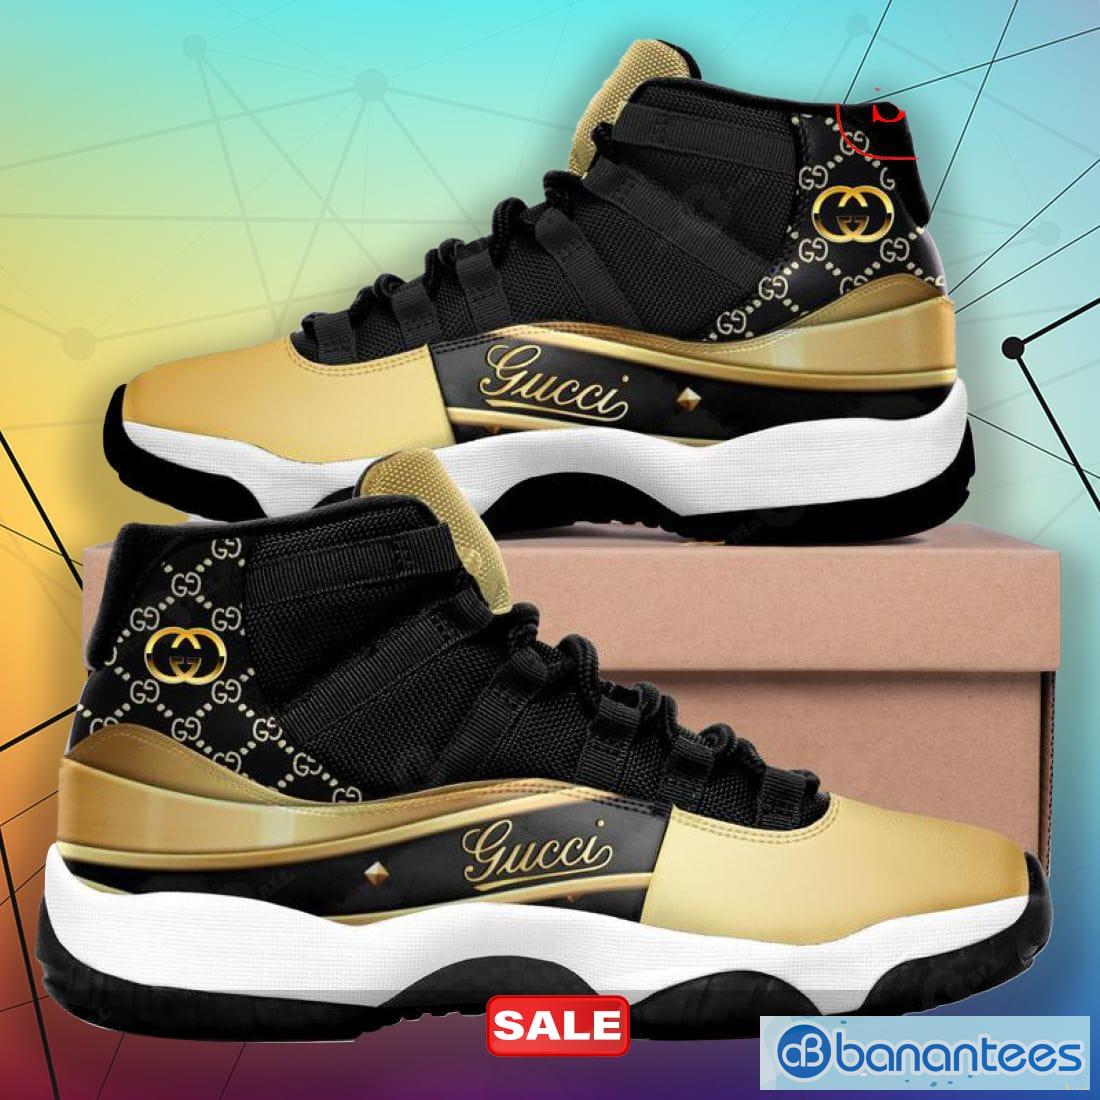 Gucci Black Gold Air Jordan 11 Sneakers Gifts For Men Women Shoes Banantees